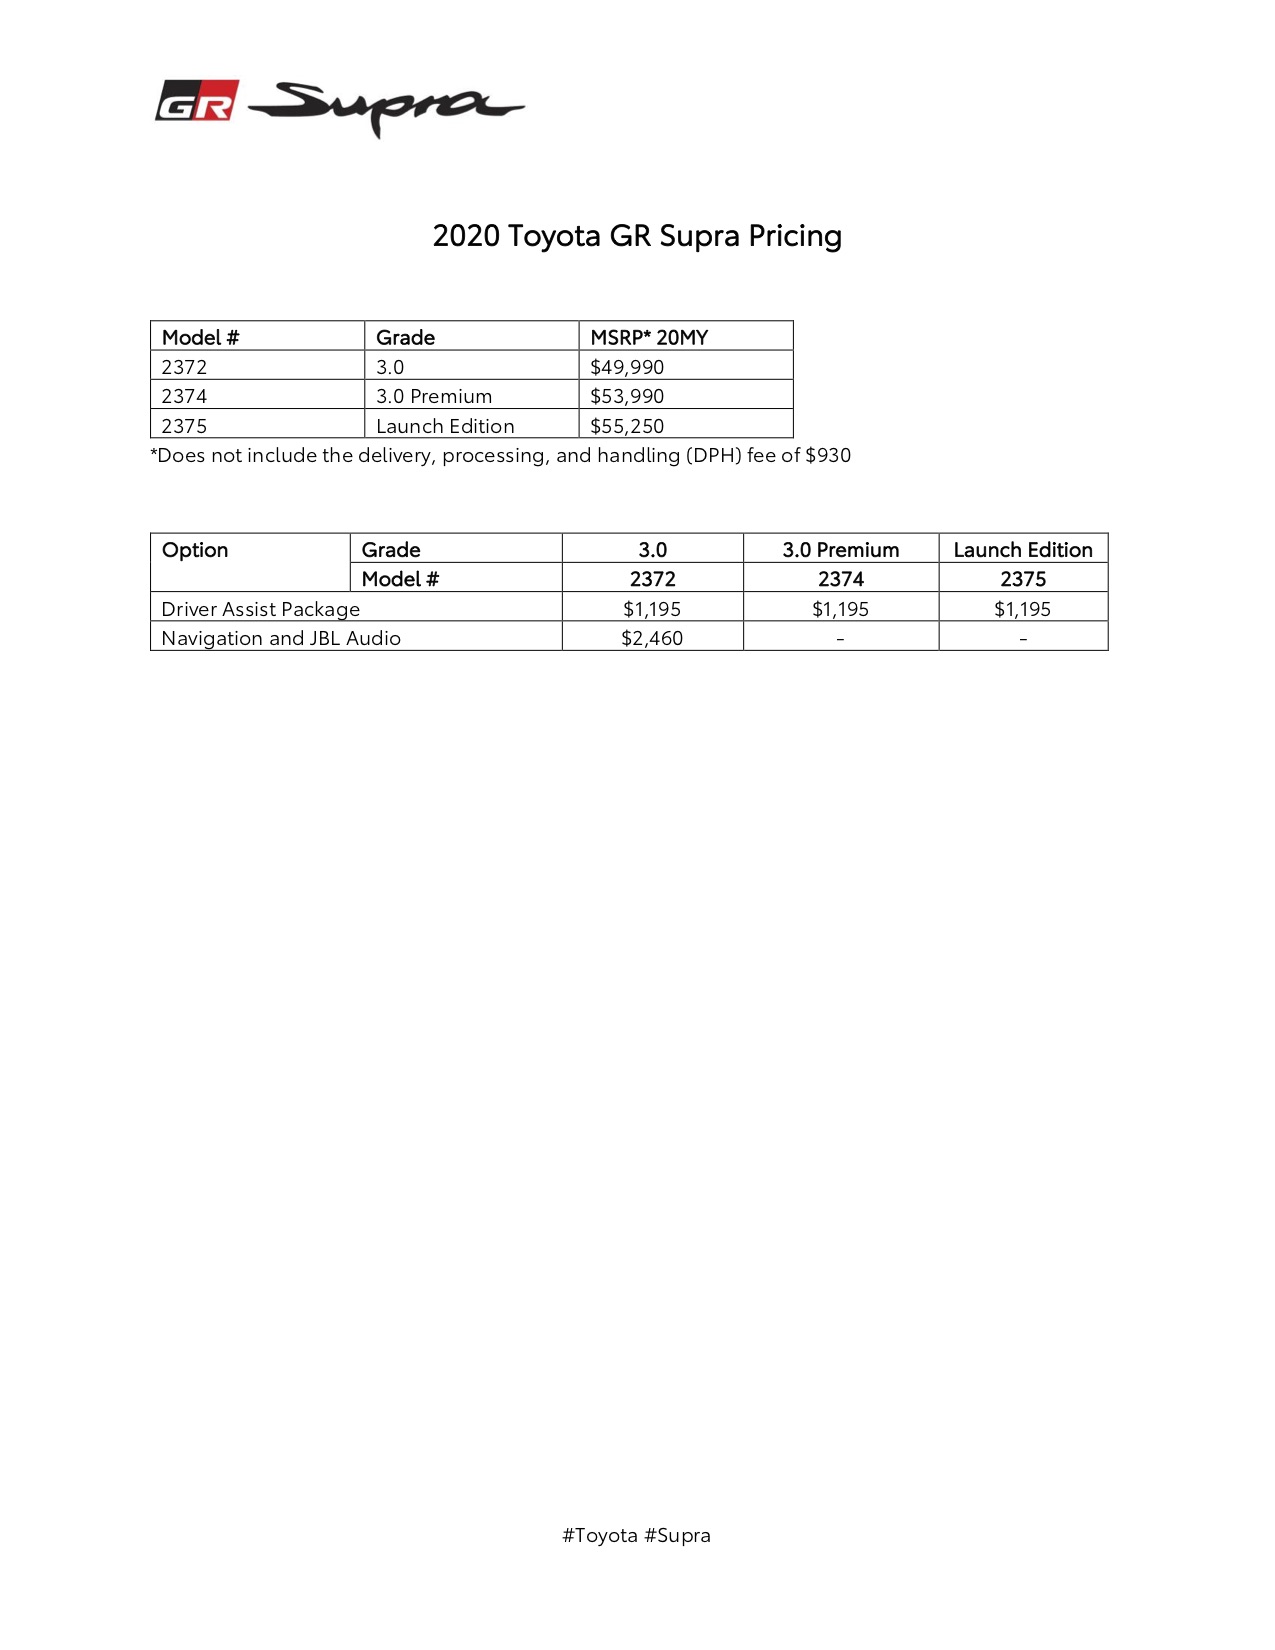 2020 Toyota GR Supra Pricing.jpg